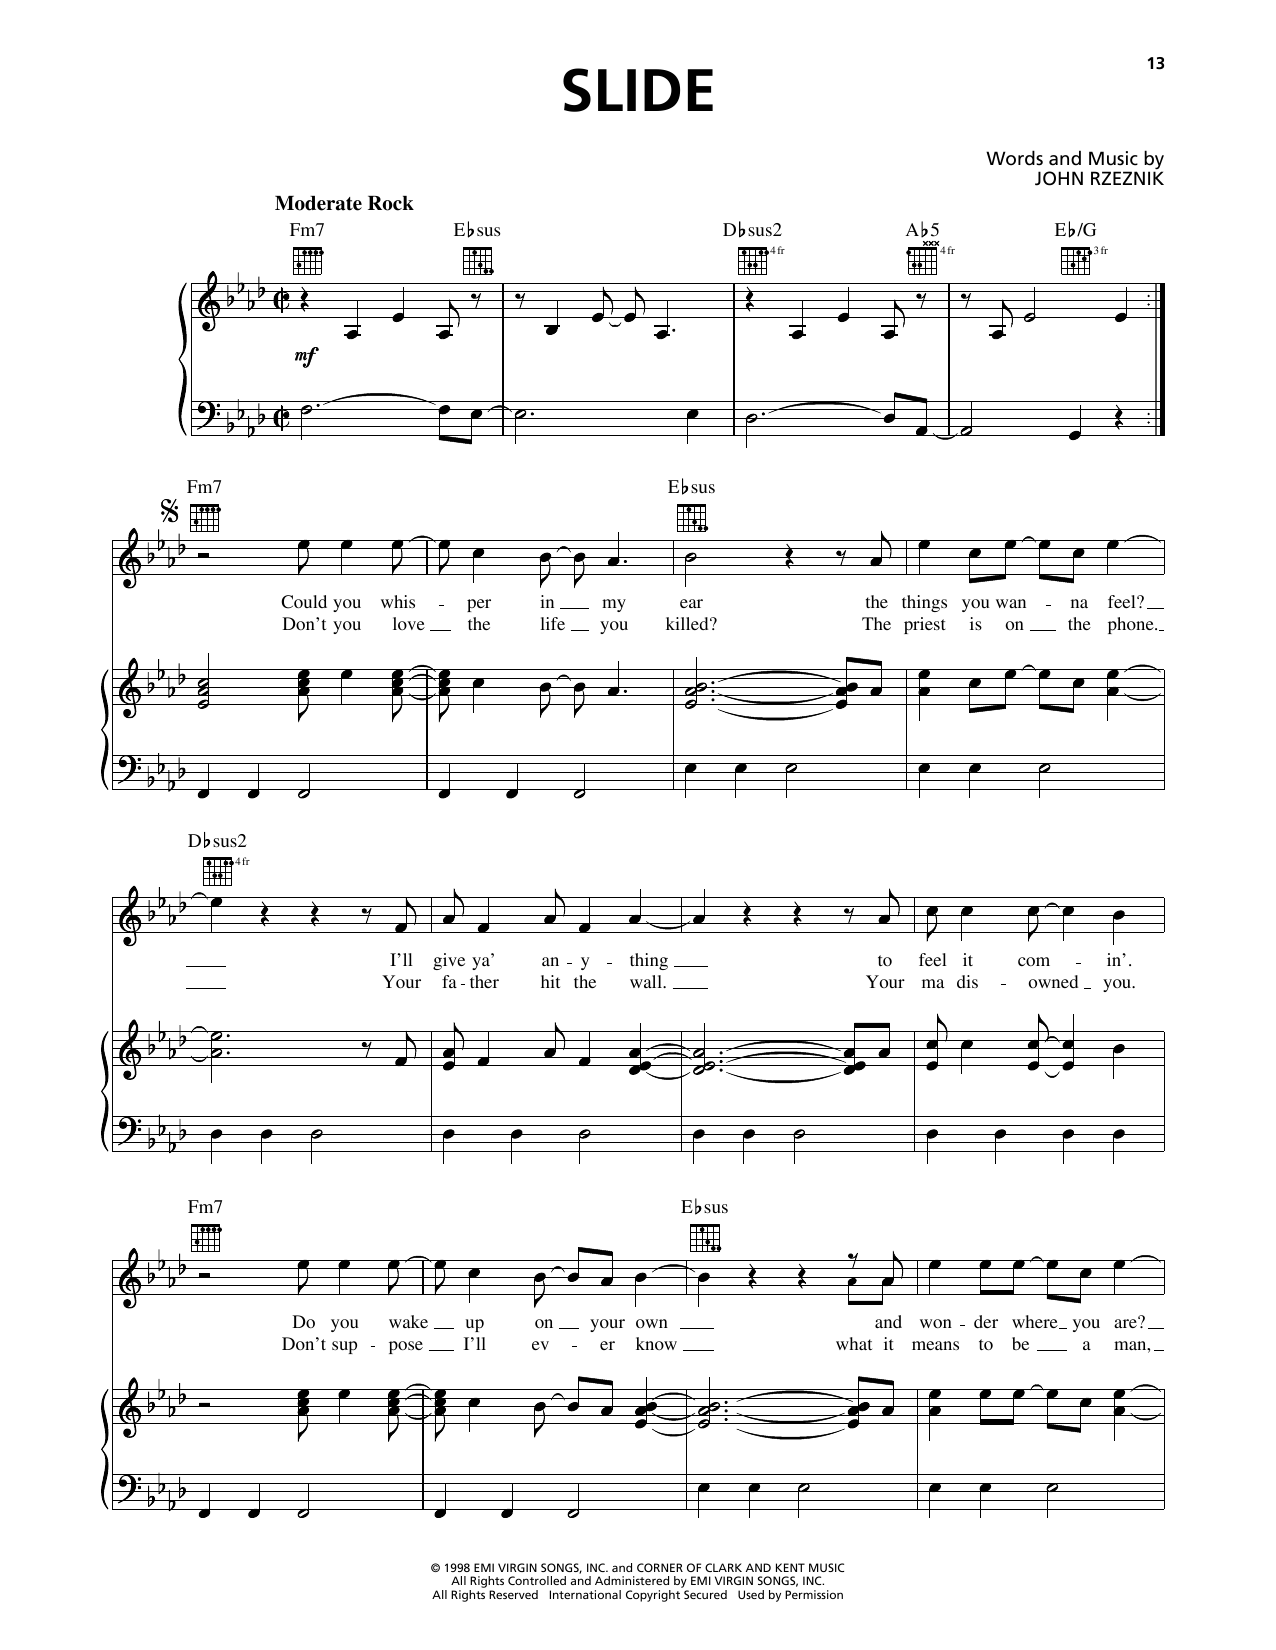 The Goo Goo Dolls Slide Sheet Music Notes & Chords for Guitar Tab - Download or Print PDF